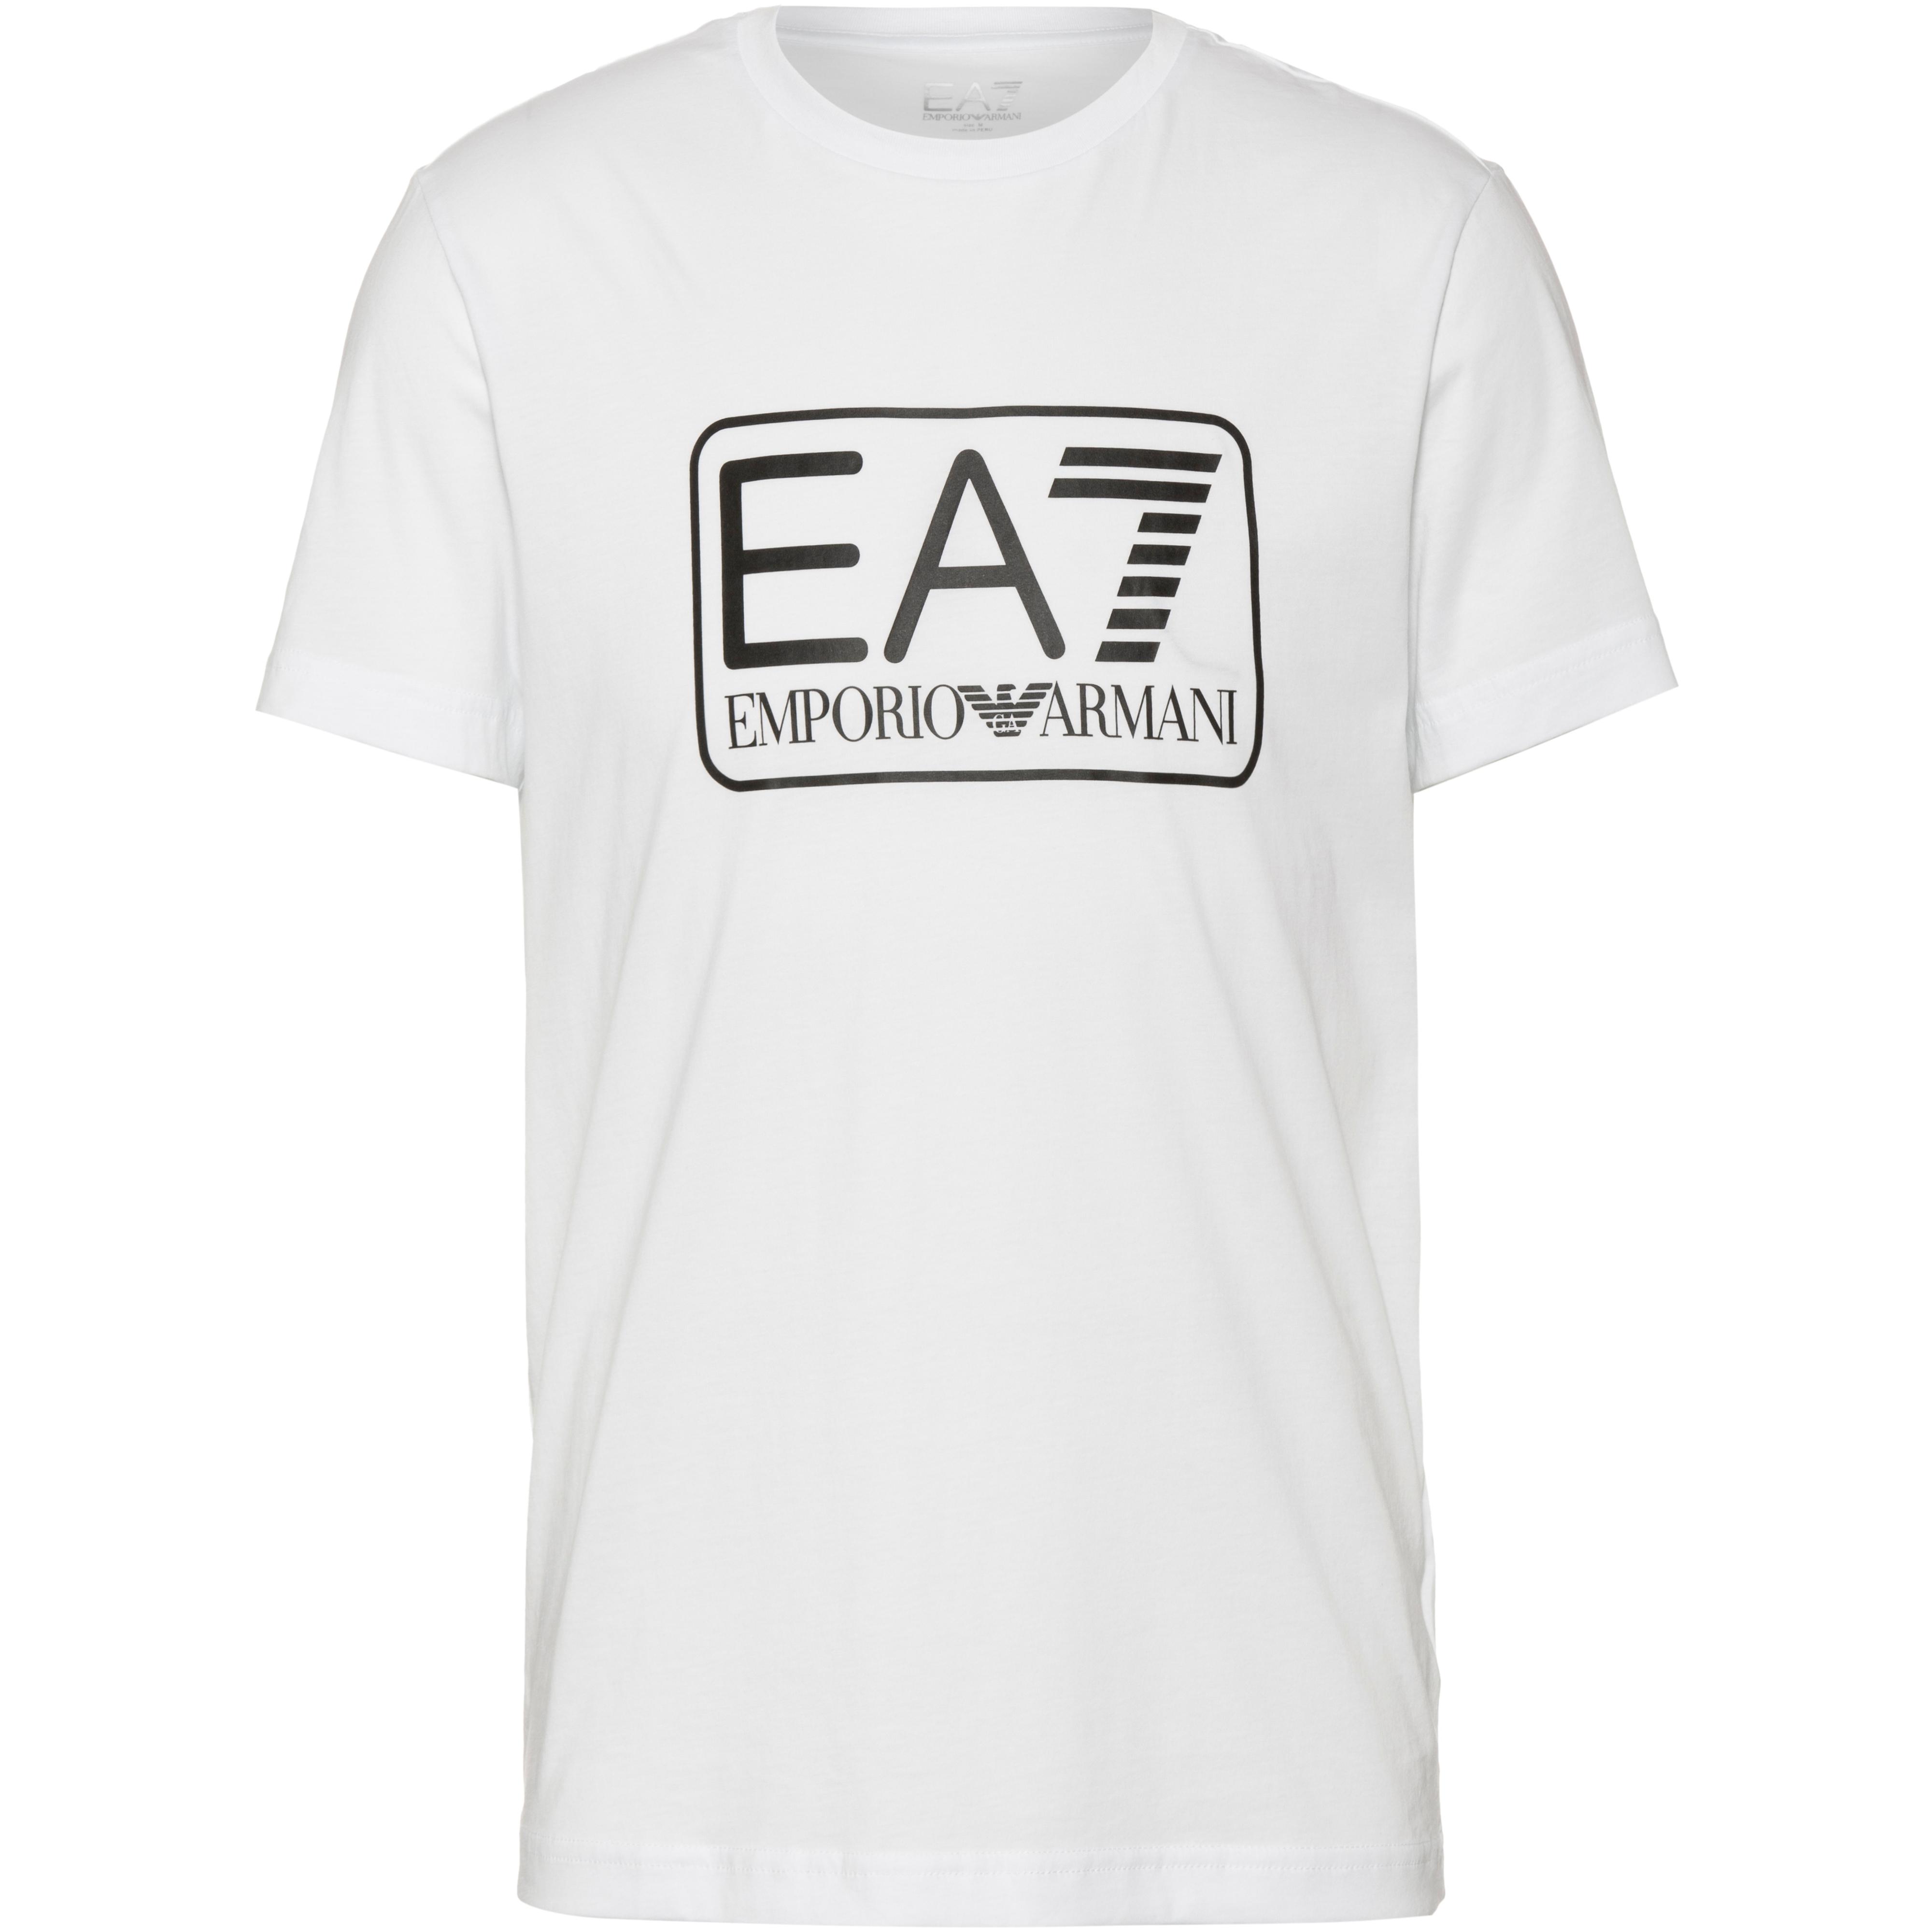 Image of EA7 Emporio Armani Printshirt Herren